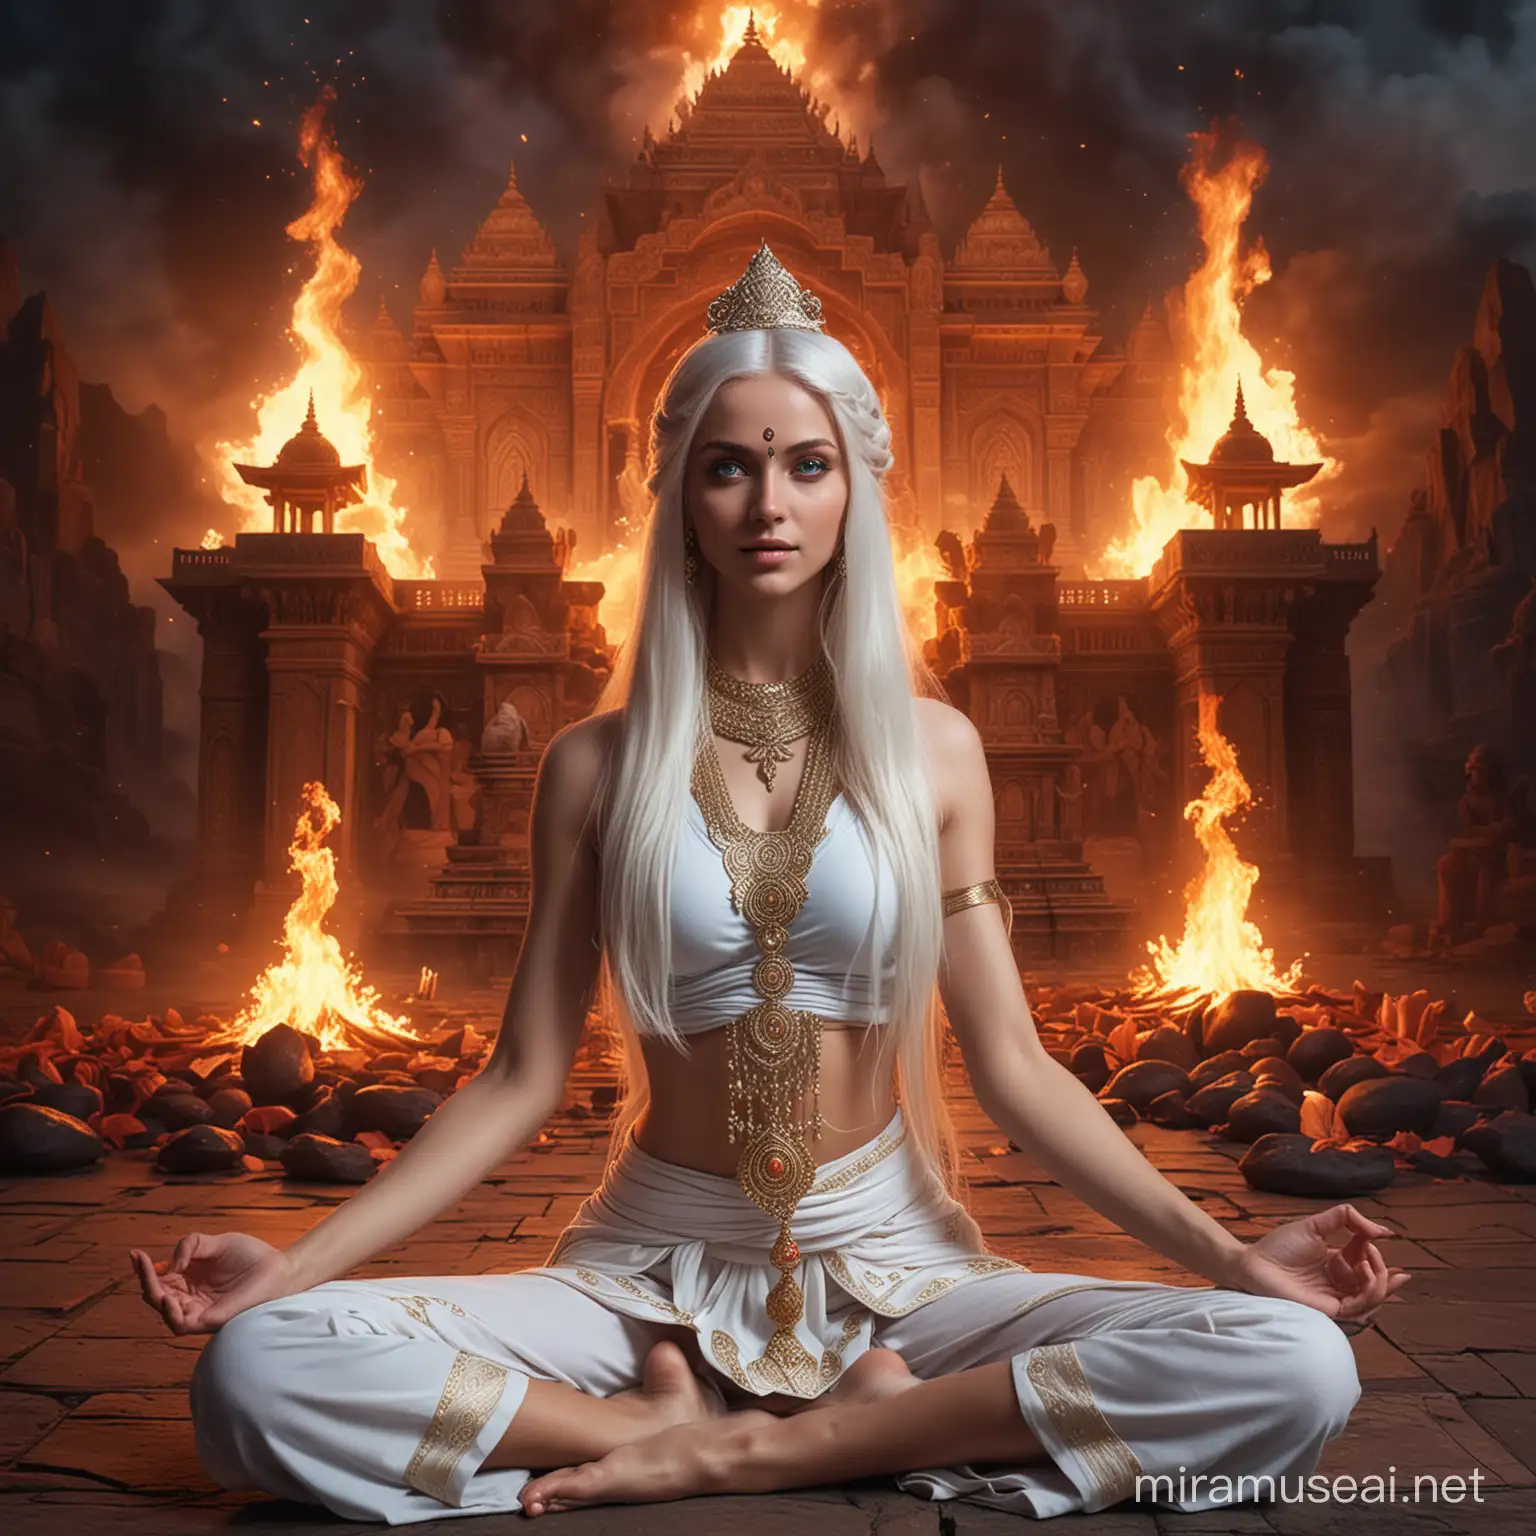 Majestic Hindu Empress Goddess Meditates Amidst Flames in Dark Palace